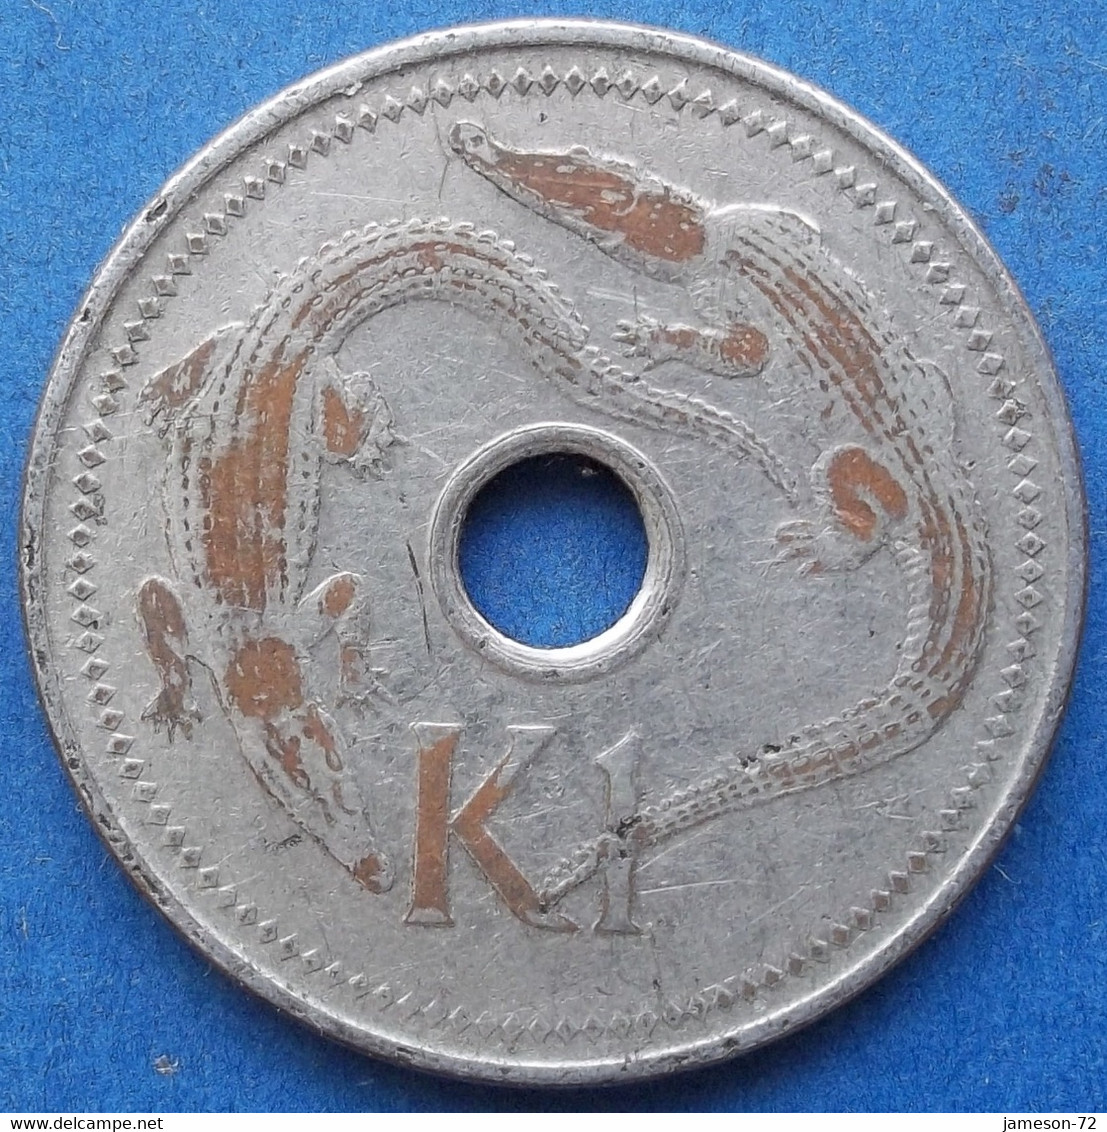 PAPUA NEW GUINEA - 1 Kina 2002 "salt Water Crocodiles" KM# 6a - Edelweiss Coins - Papua New Guinea